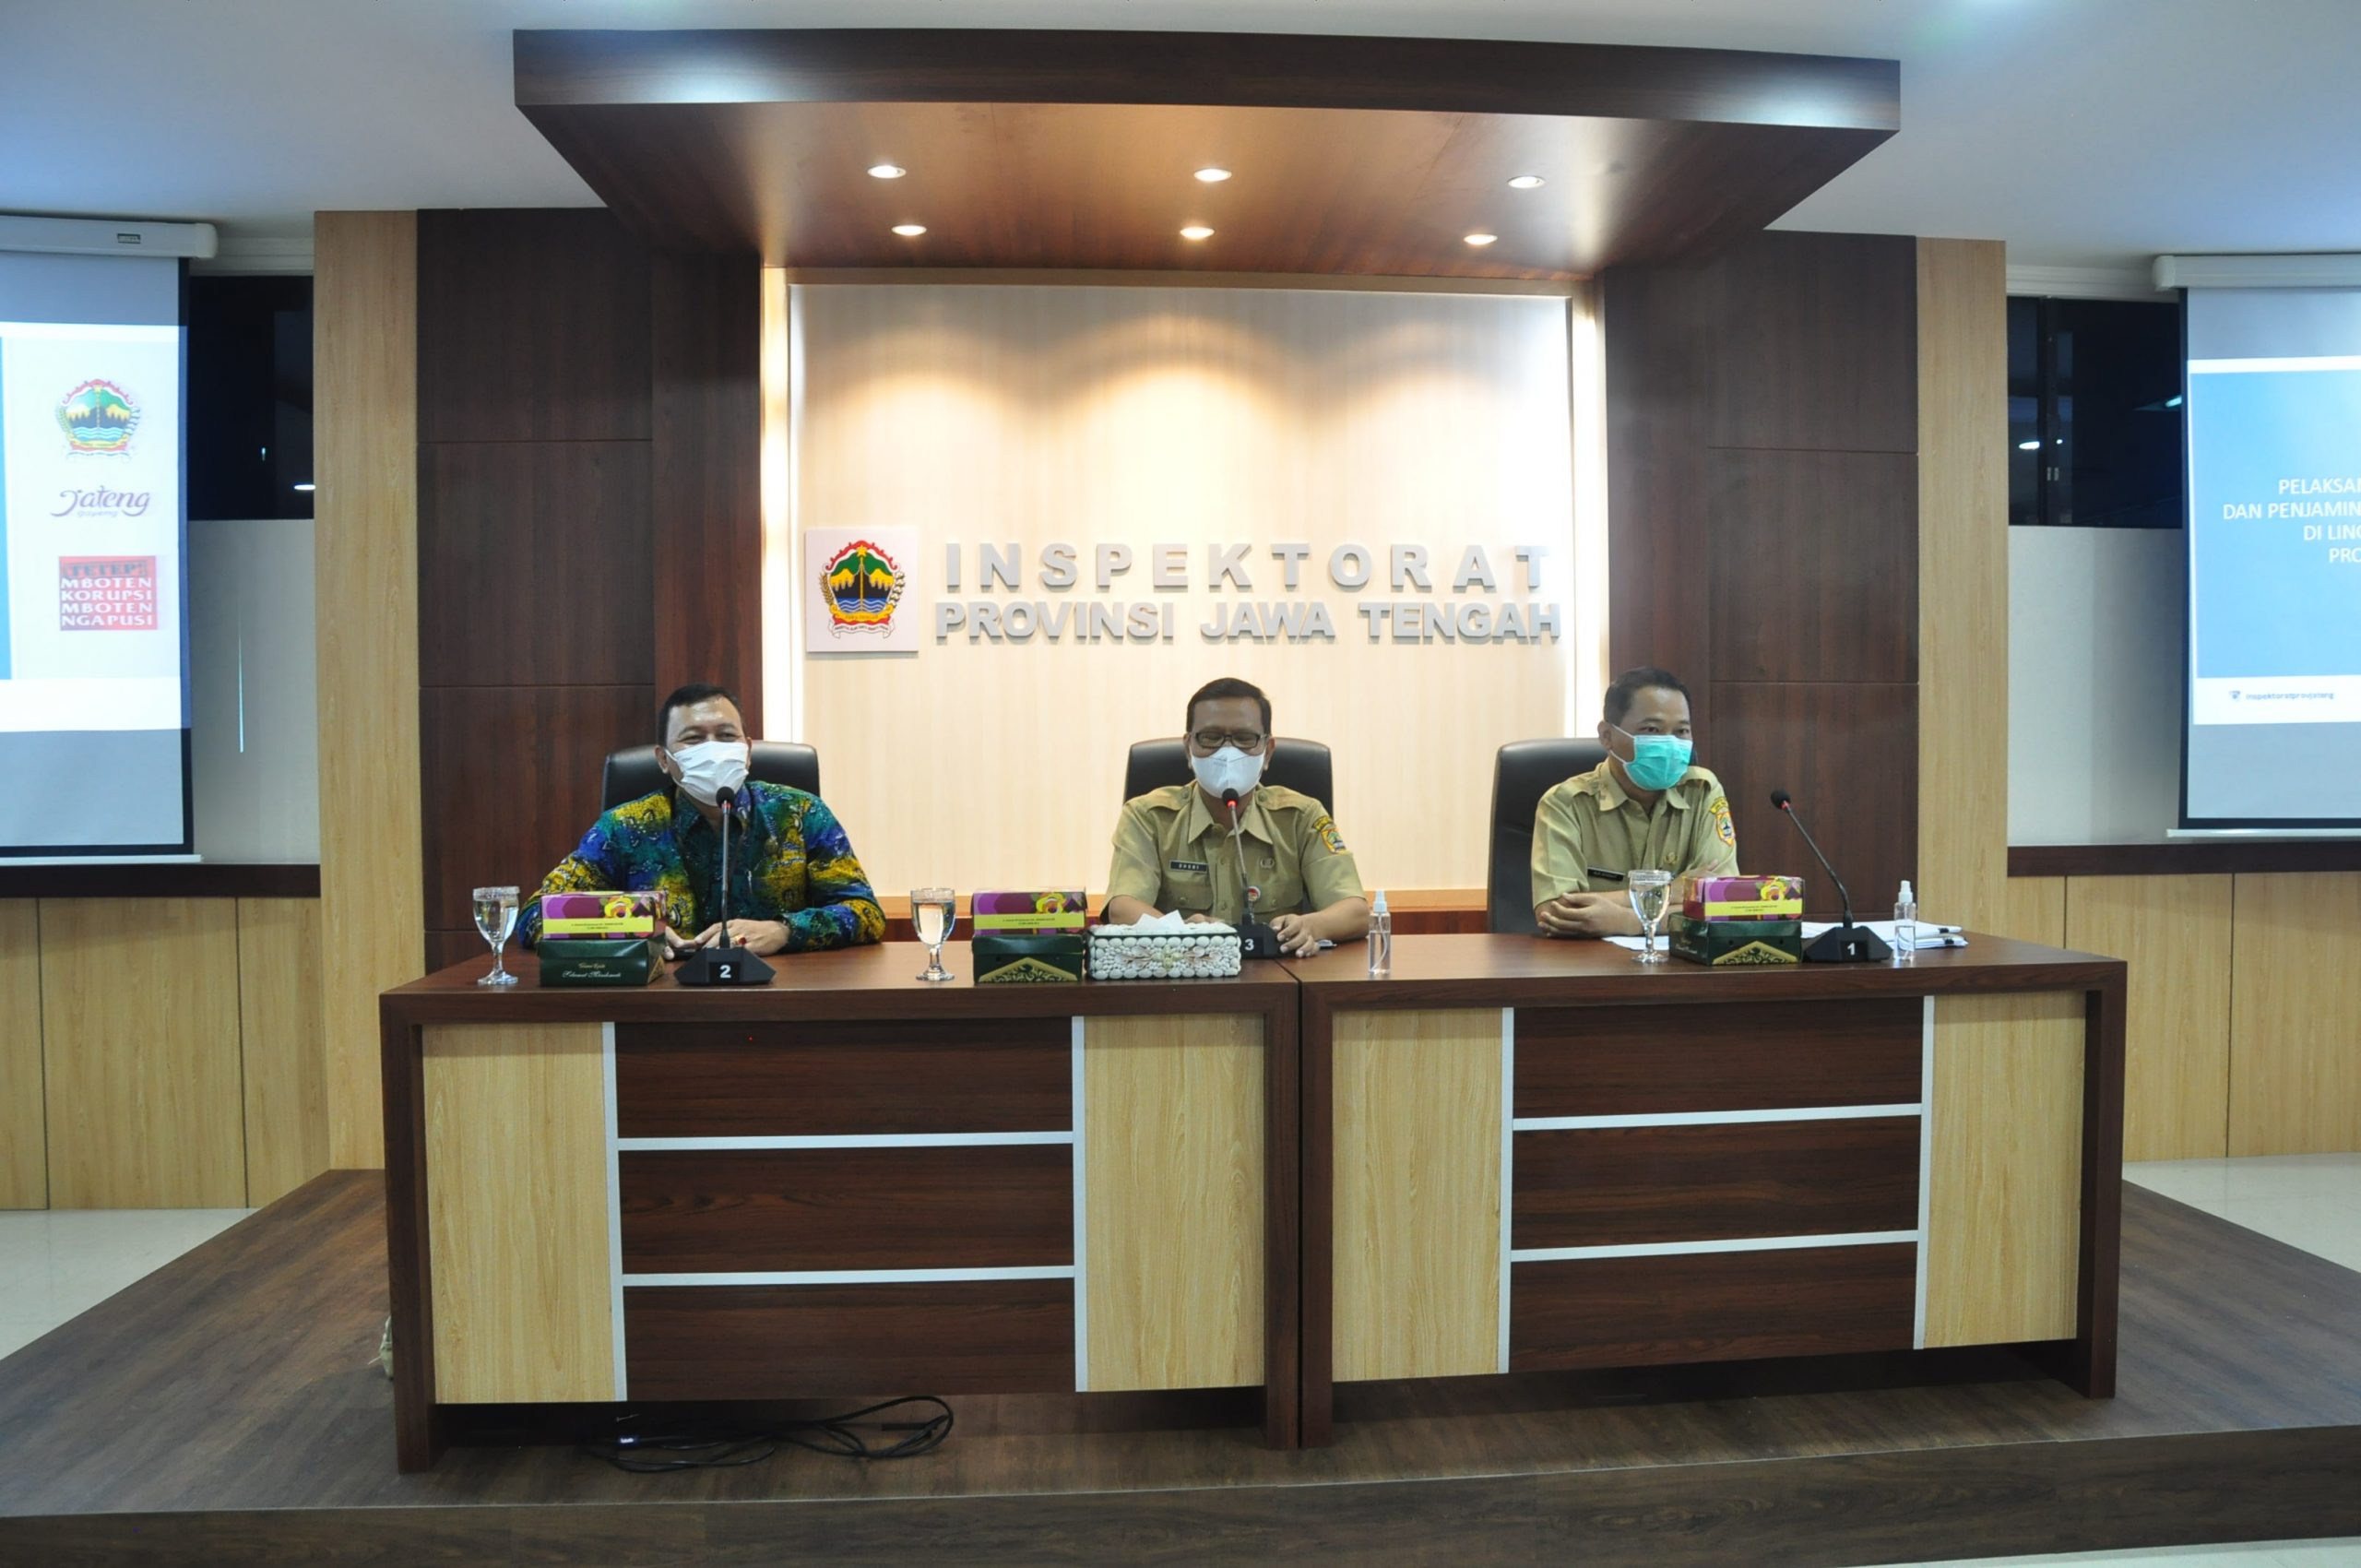 Kunjungan kerja ke Inspektorat Jawa Tengah